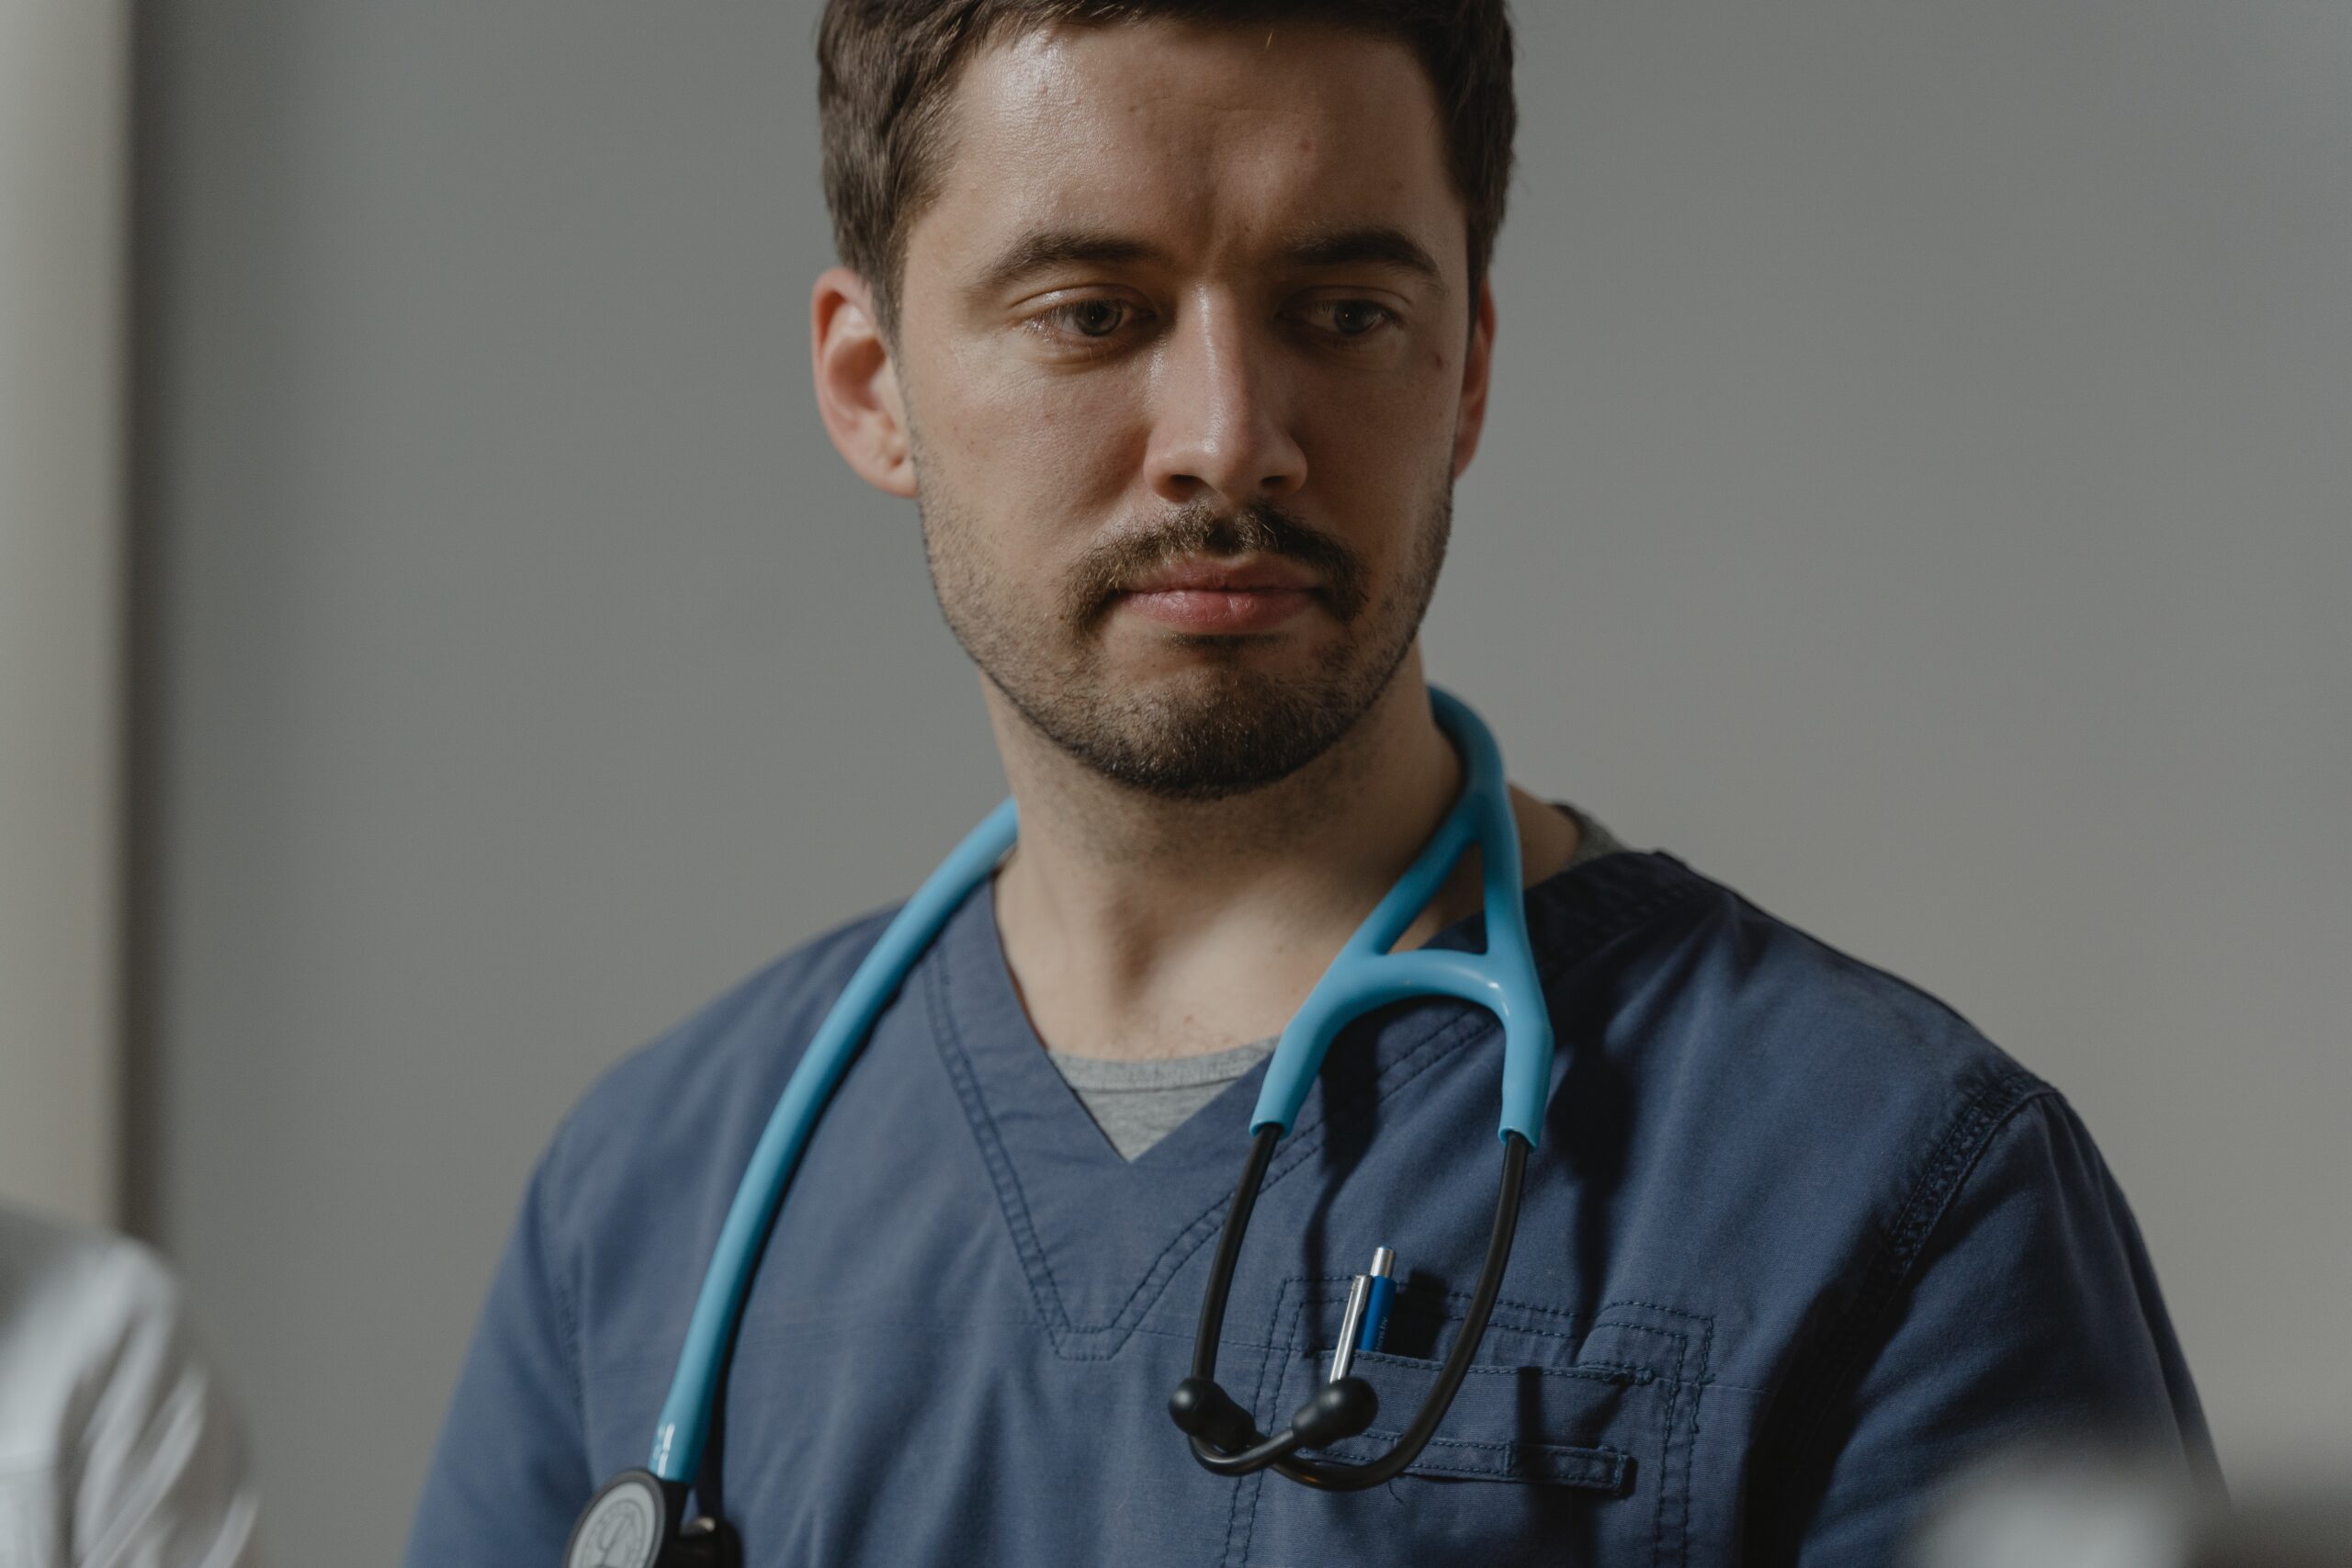 Man in Scrubs with Stethoscope Around Neck